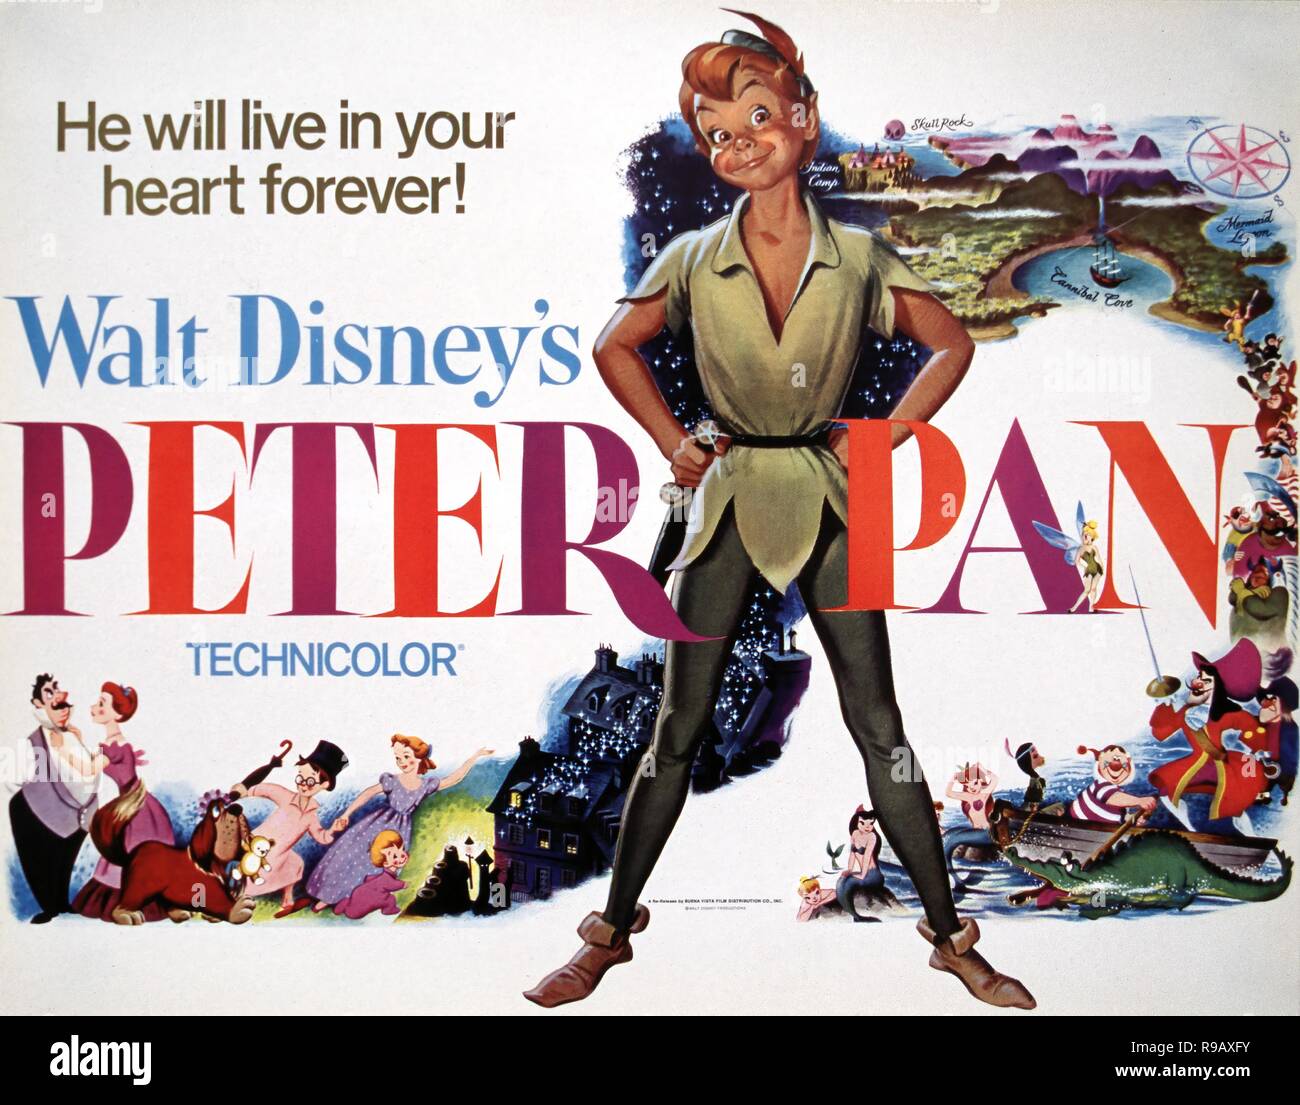 Original Film Titel: PETER PAN. Englischer Titel: PETER PAN. Jahr: 1953. Regie: WILFRED JACKSON; HAMILTON LUKAS. Credit: WALT DISNEY PRODUCTIONS/Album Stockfoto